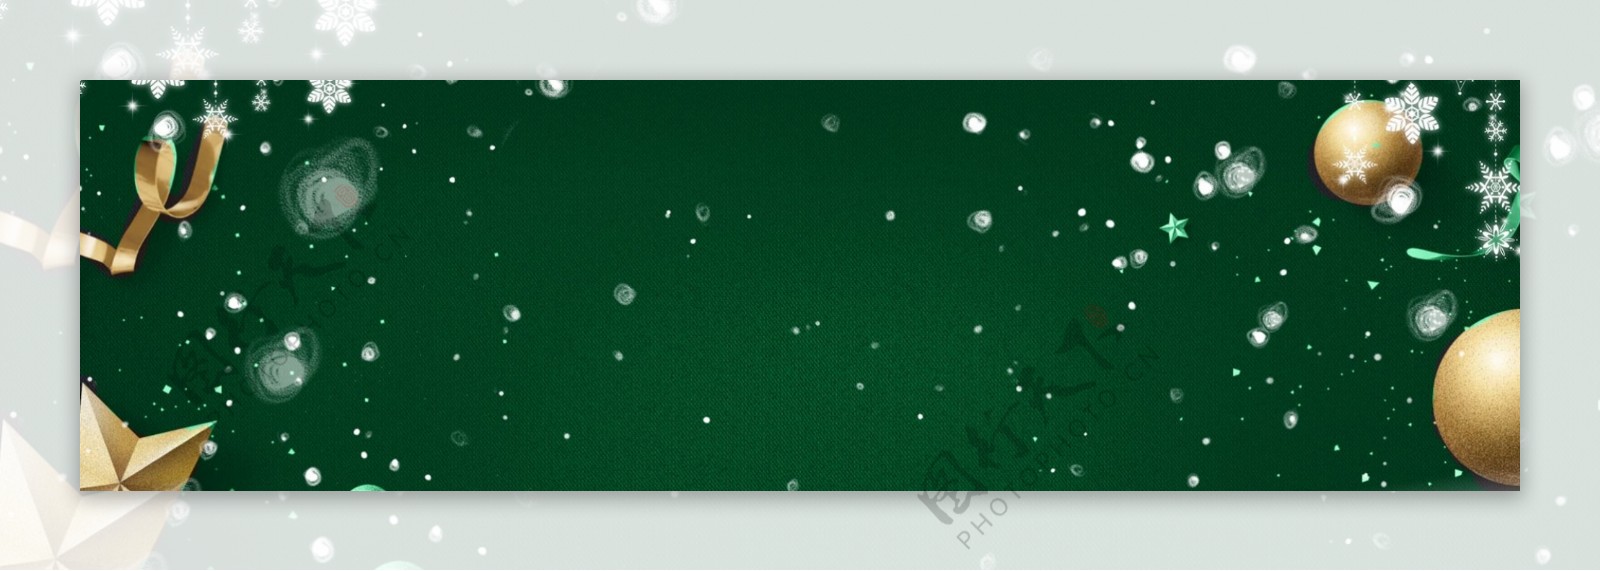 圣诞节绿色雪花卡通banner背景